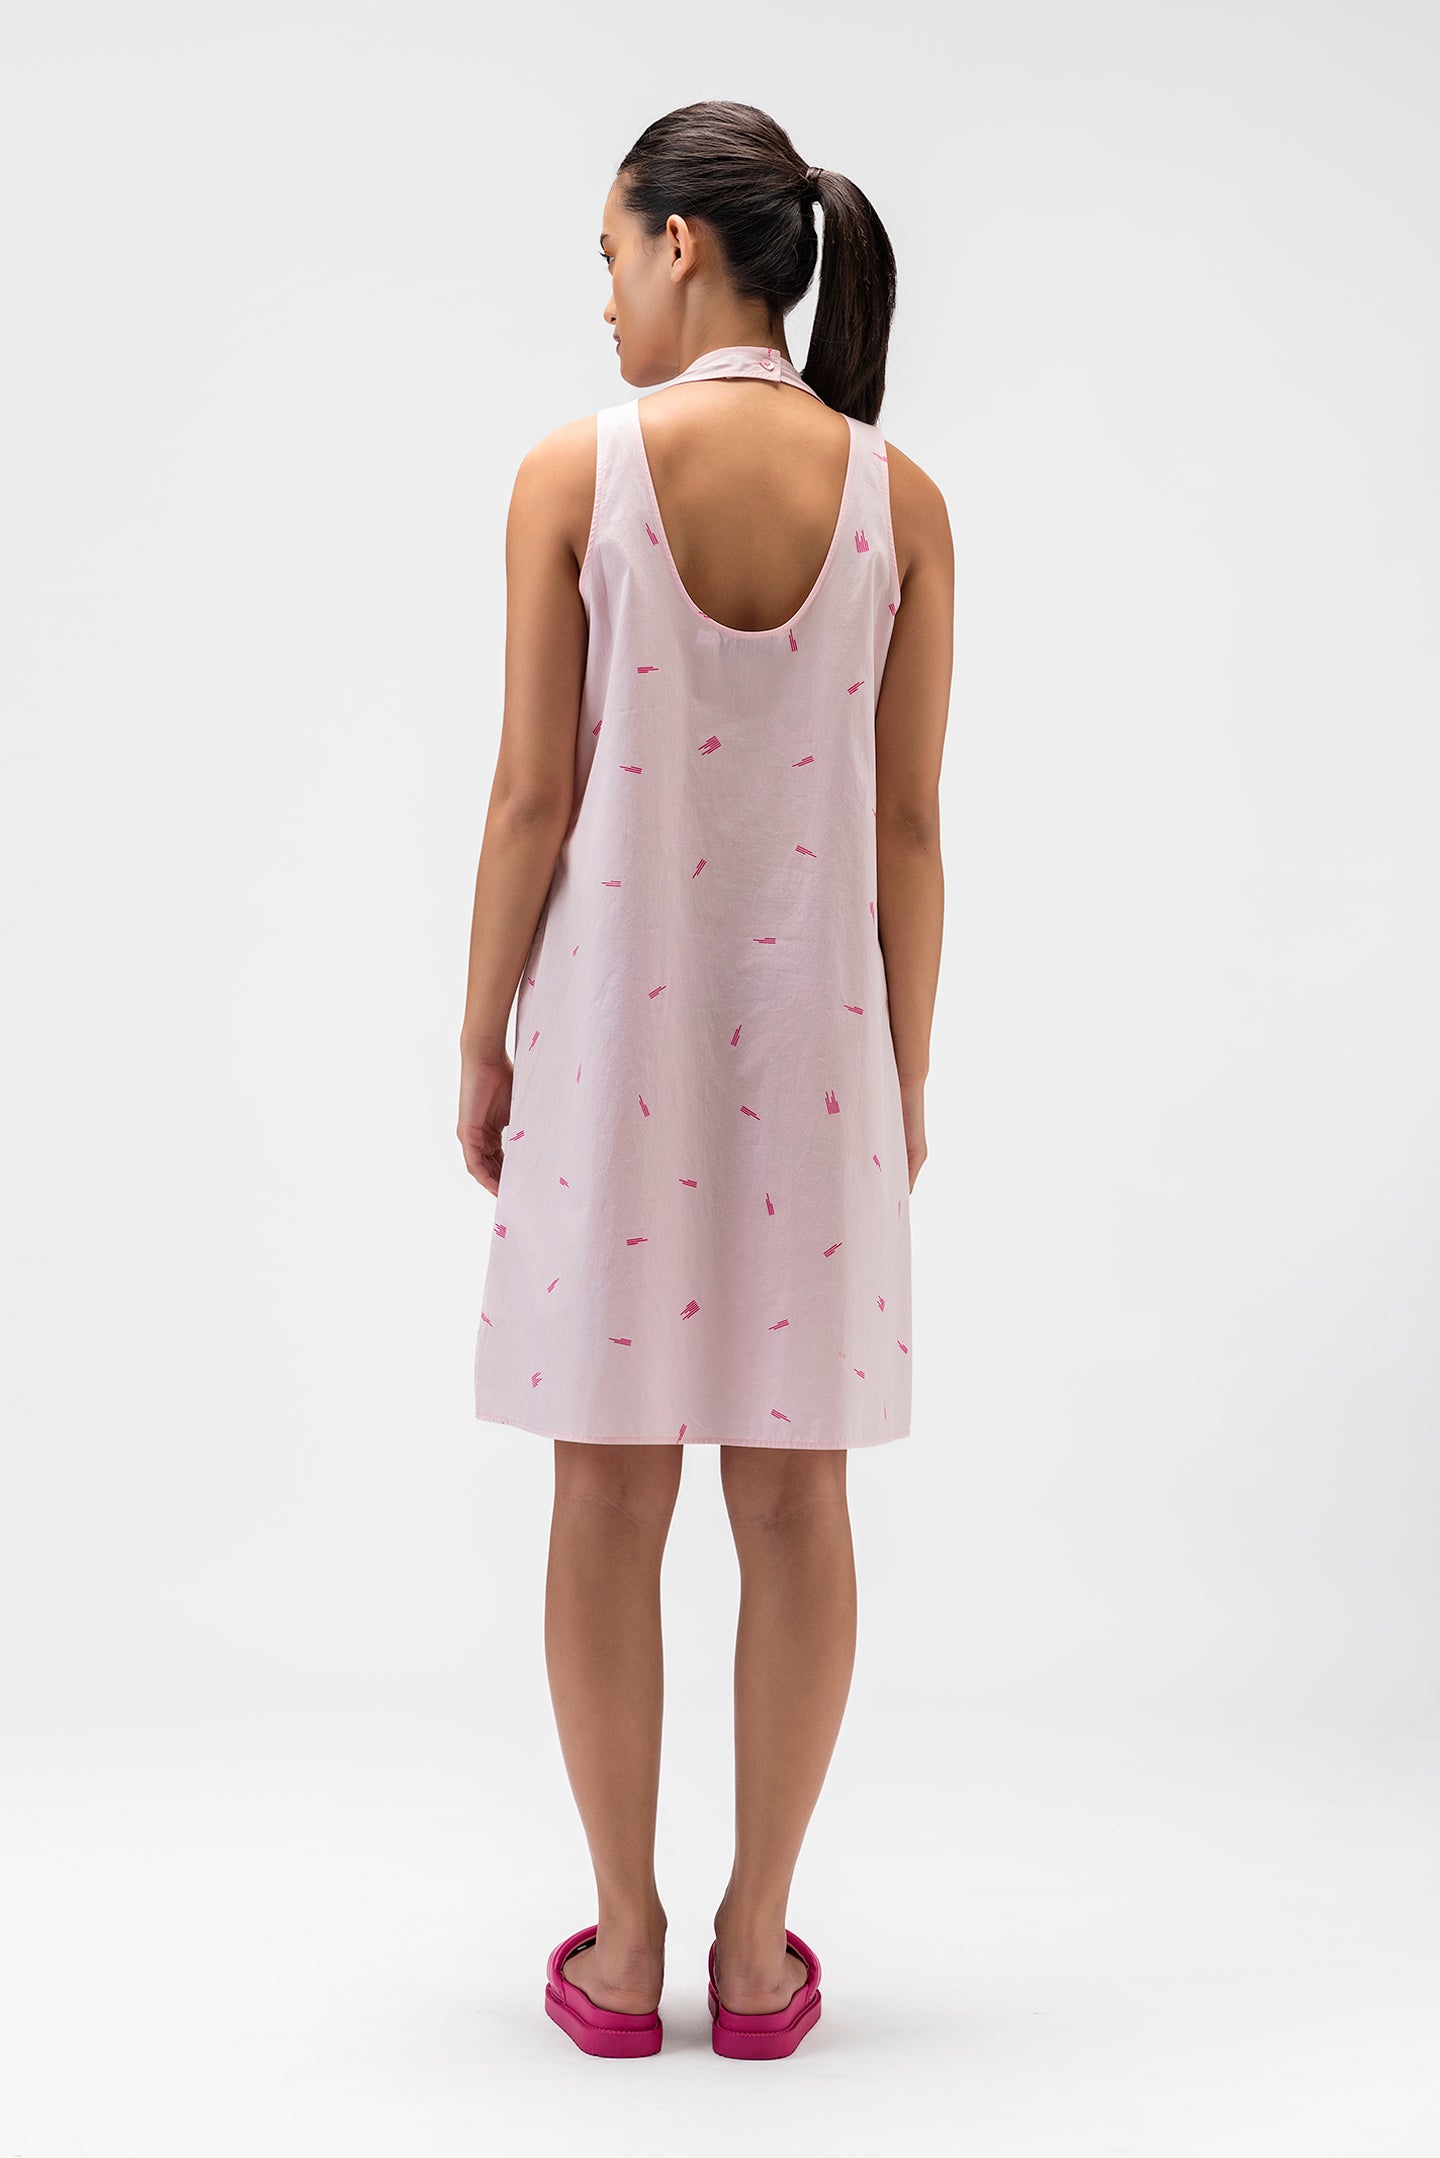 Genes Monogrammed Sleeveless Dress